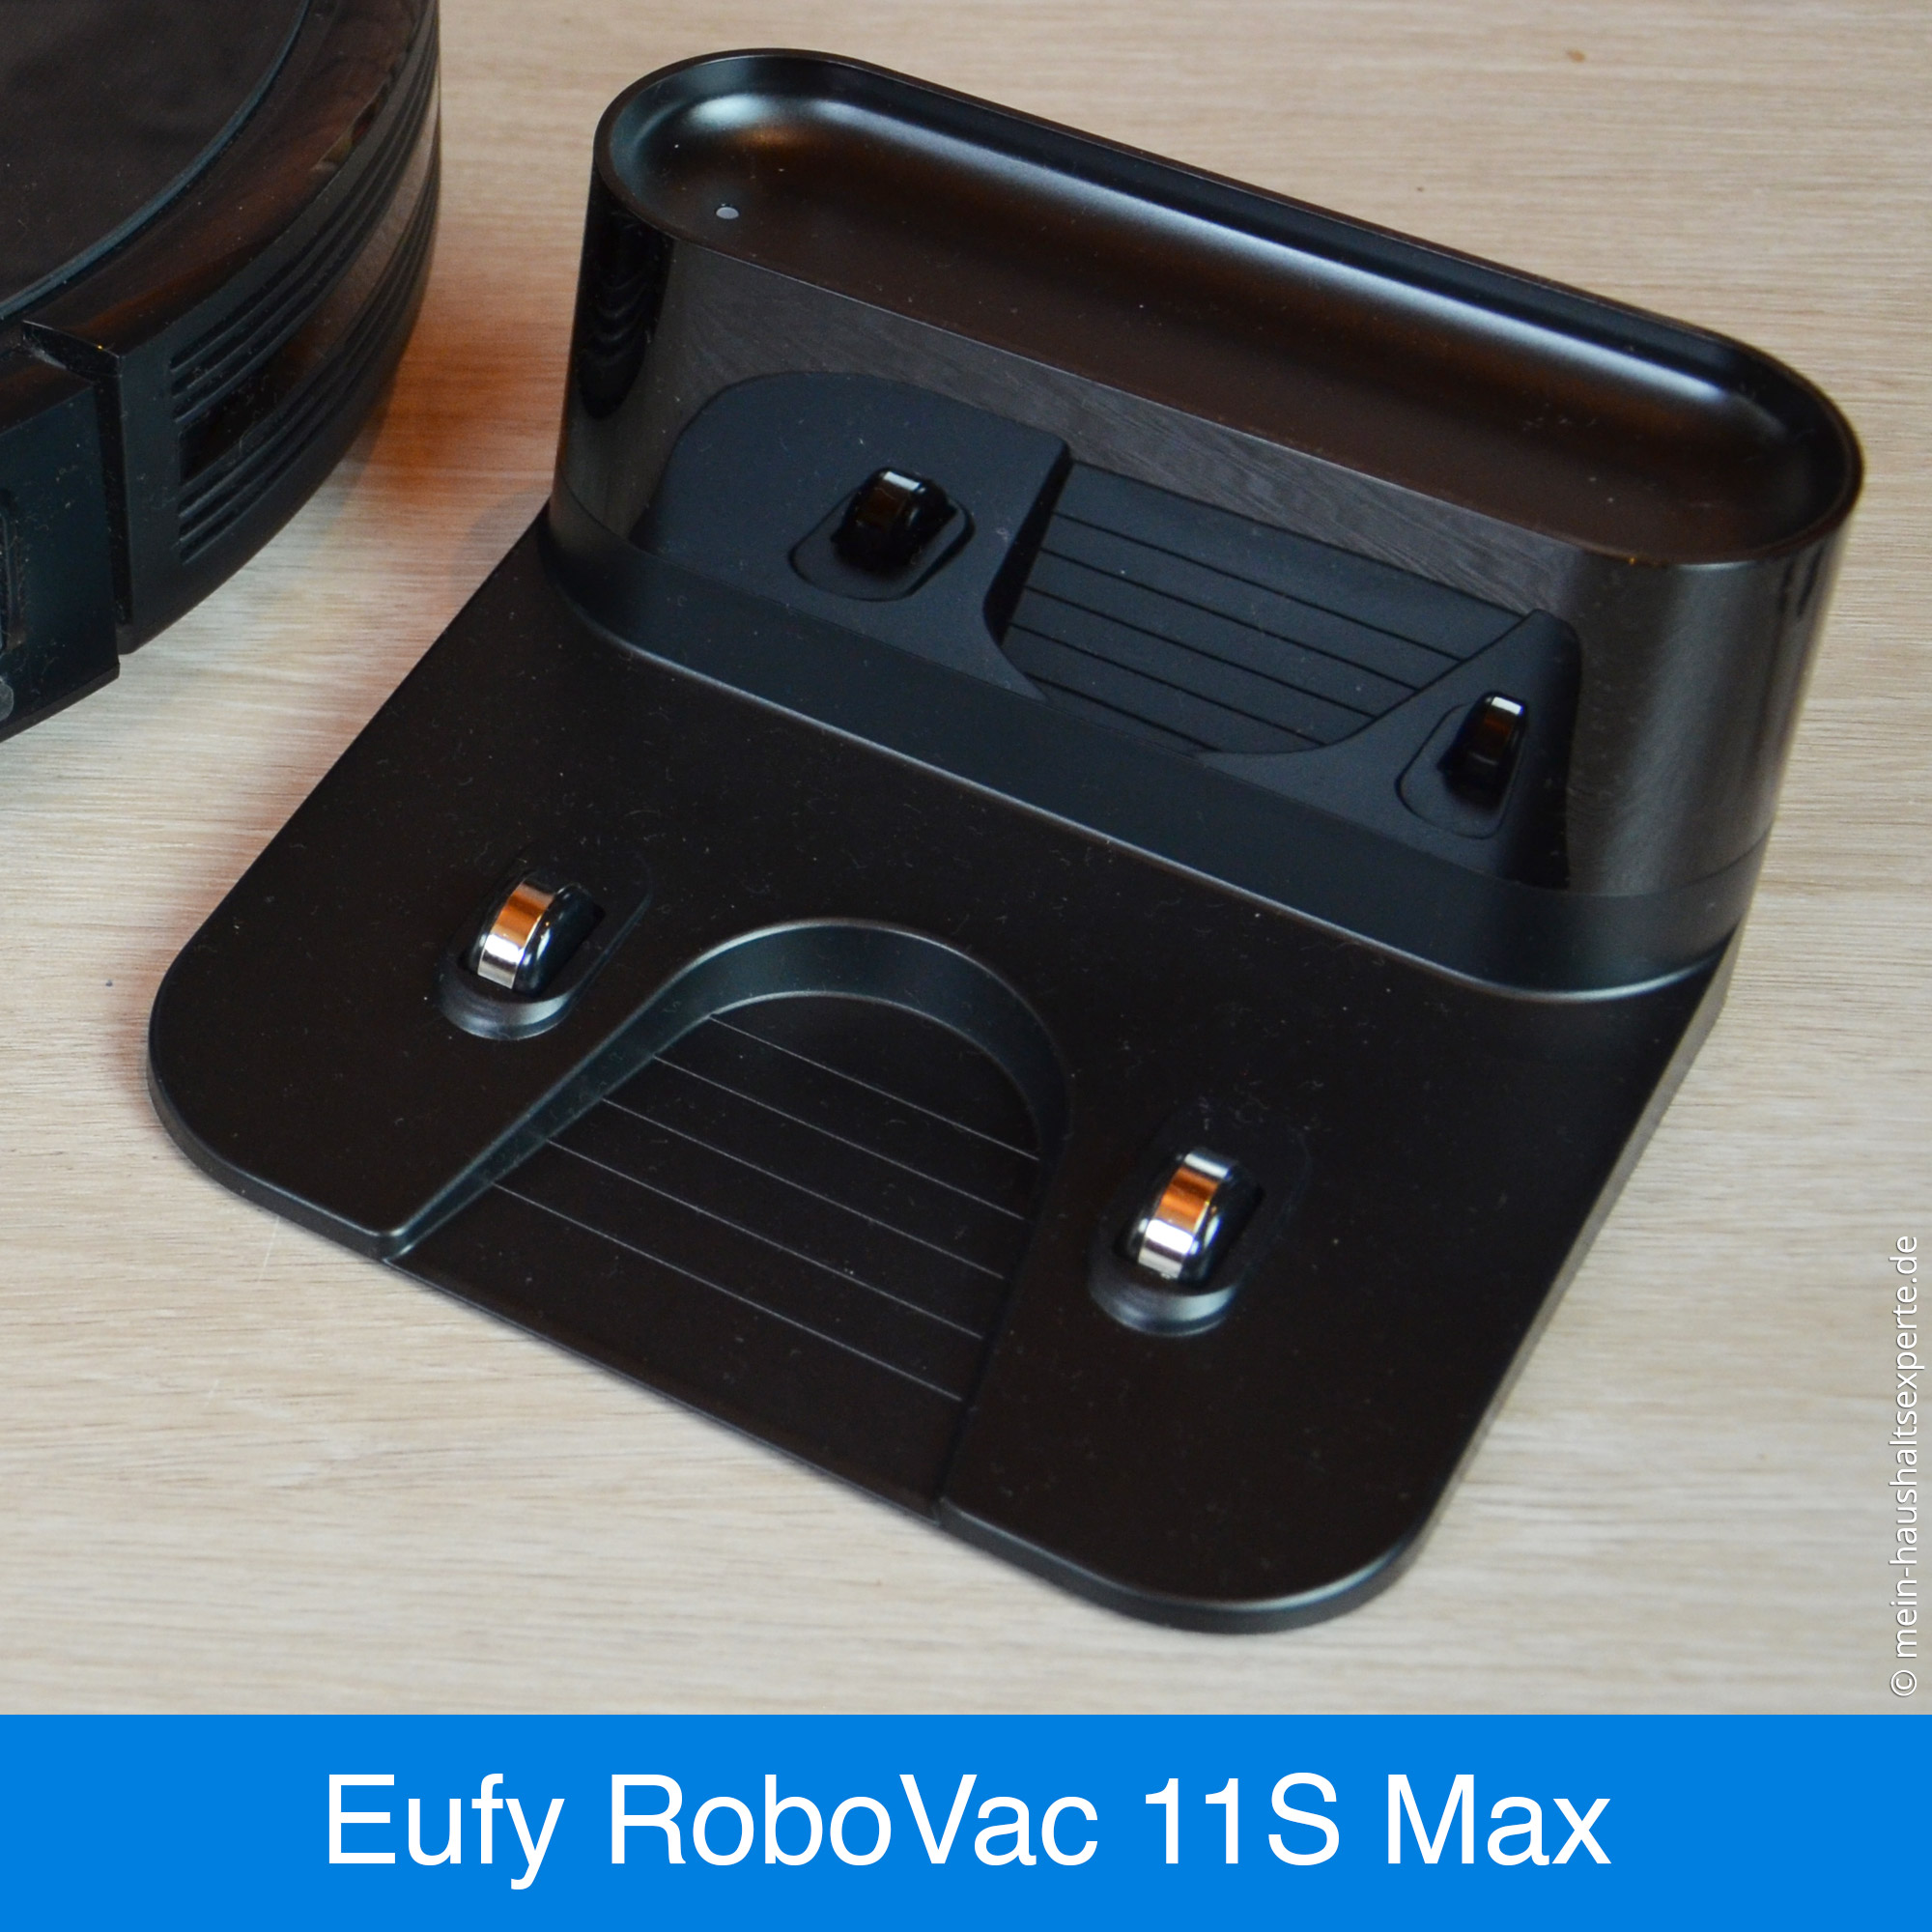 Akkulaufzeit und Ladezeit des Eufy RoboVac 11S Max